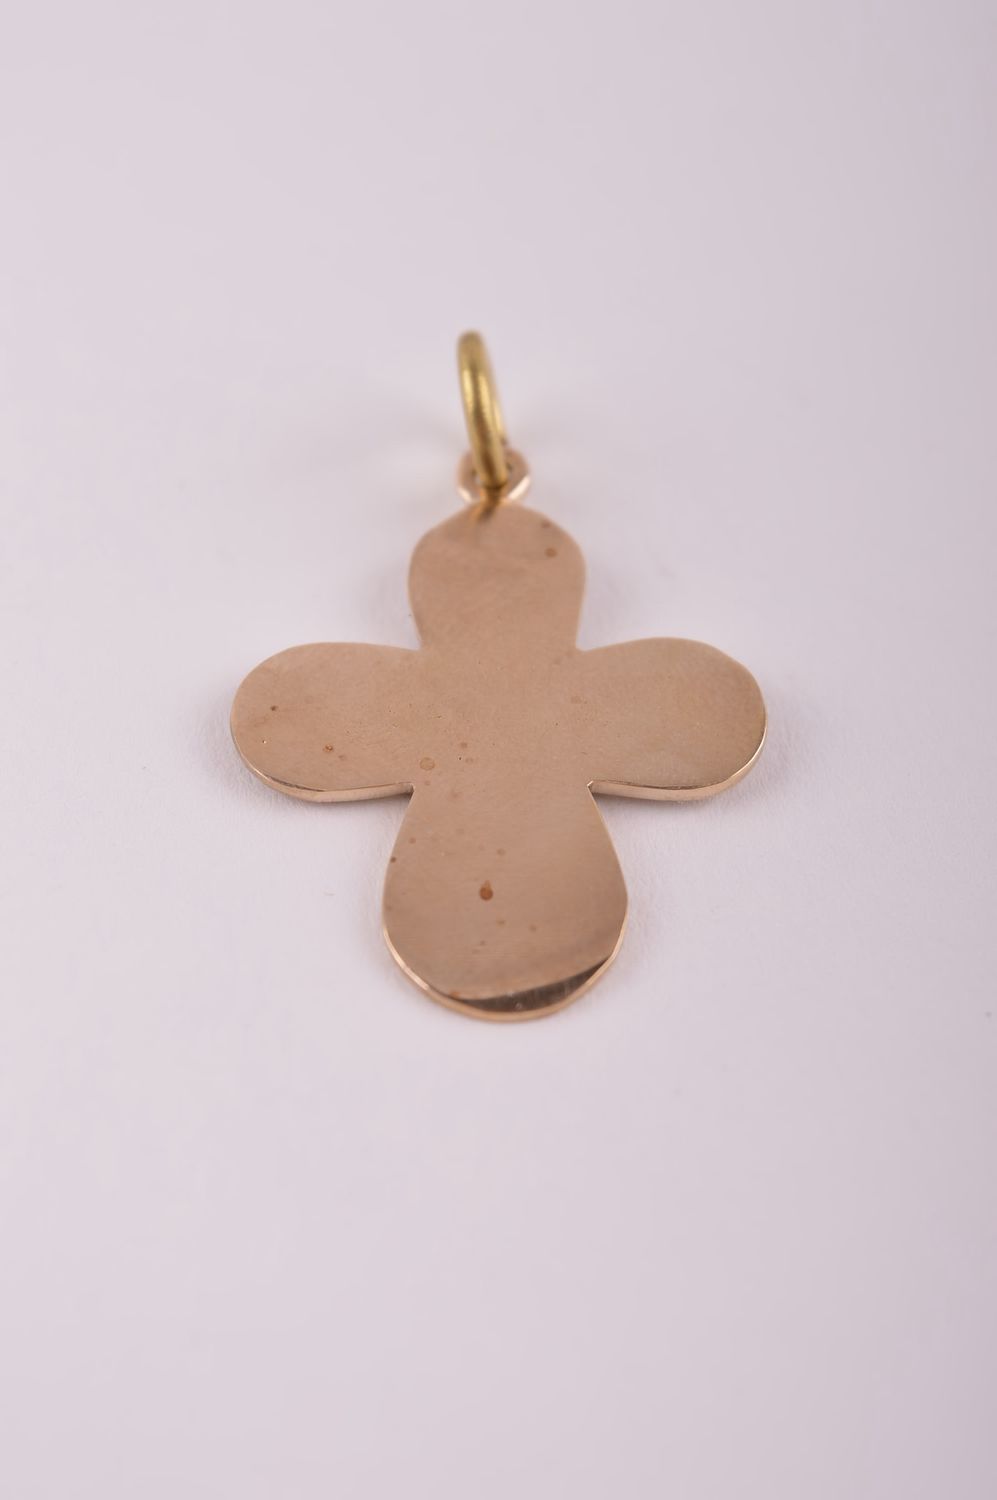 Unusual handmade cross pendant metal craft gemstone pendant jewelry designs photo 3